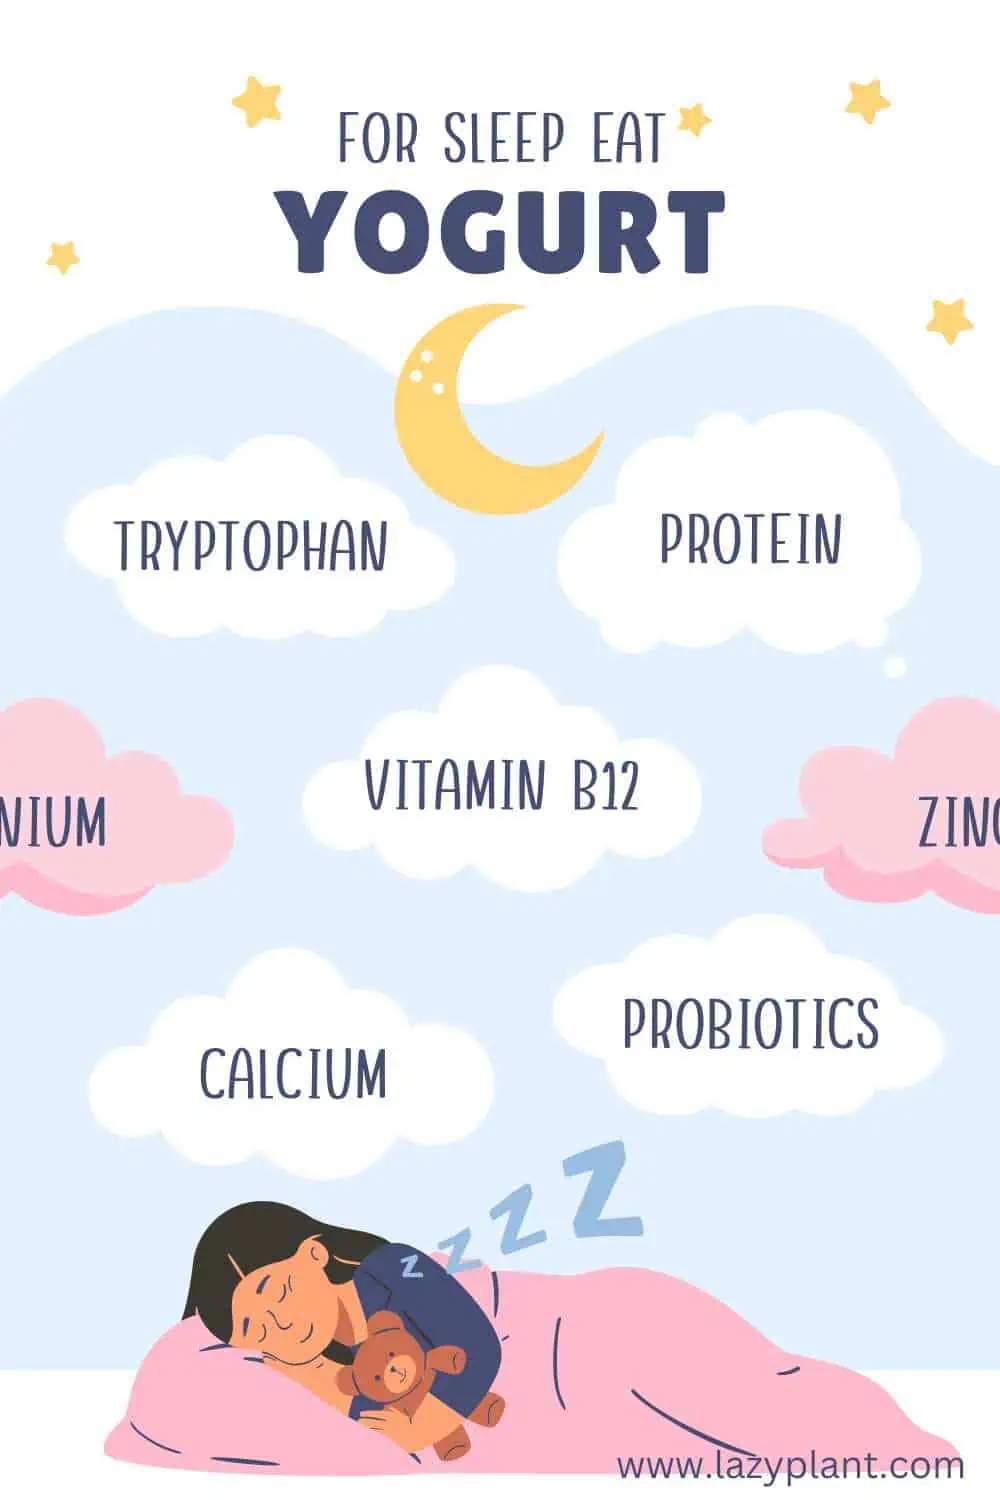 If you're having trouble sleeping, consider eating yogurt before bed as a sleep-promoting snack.